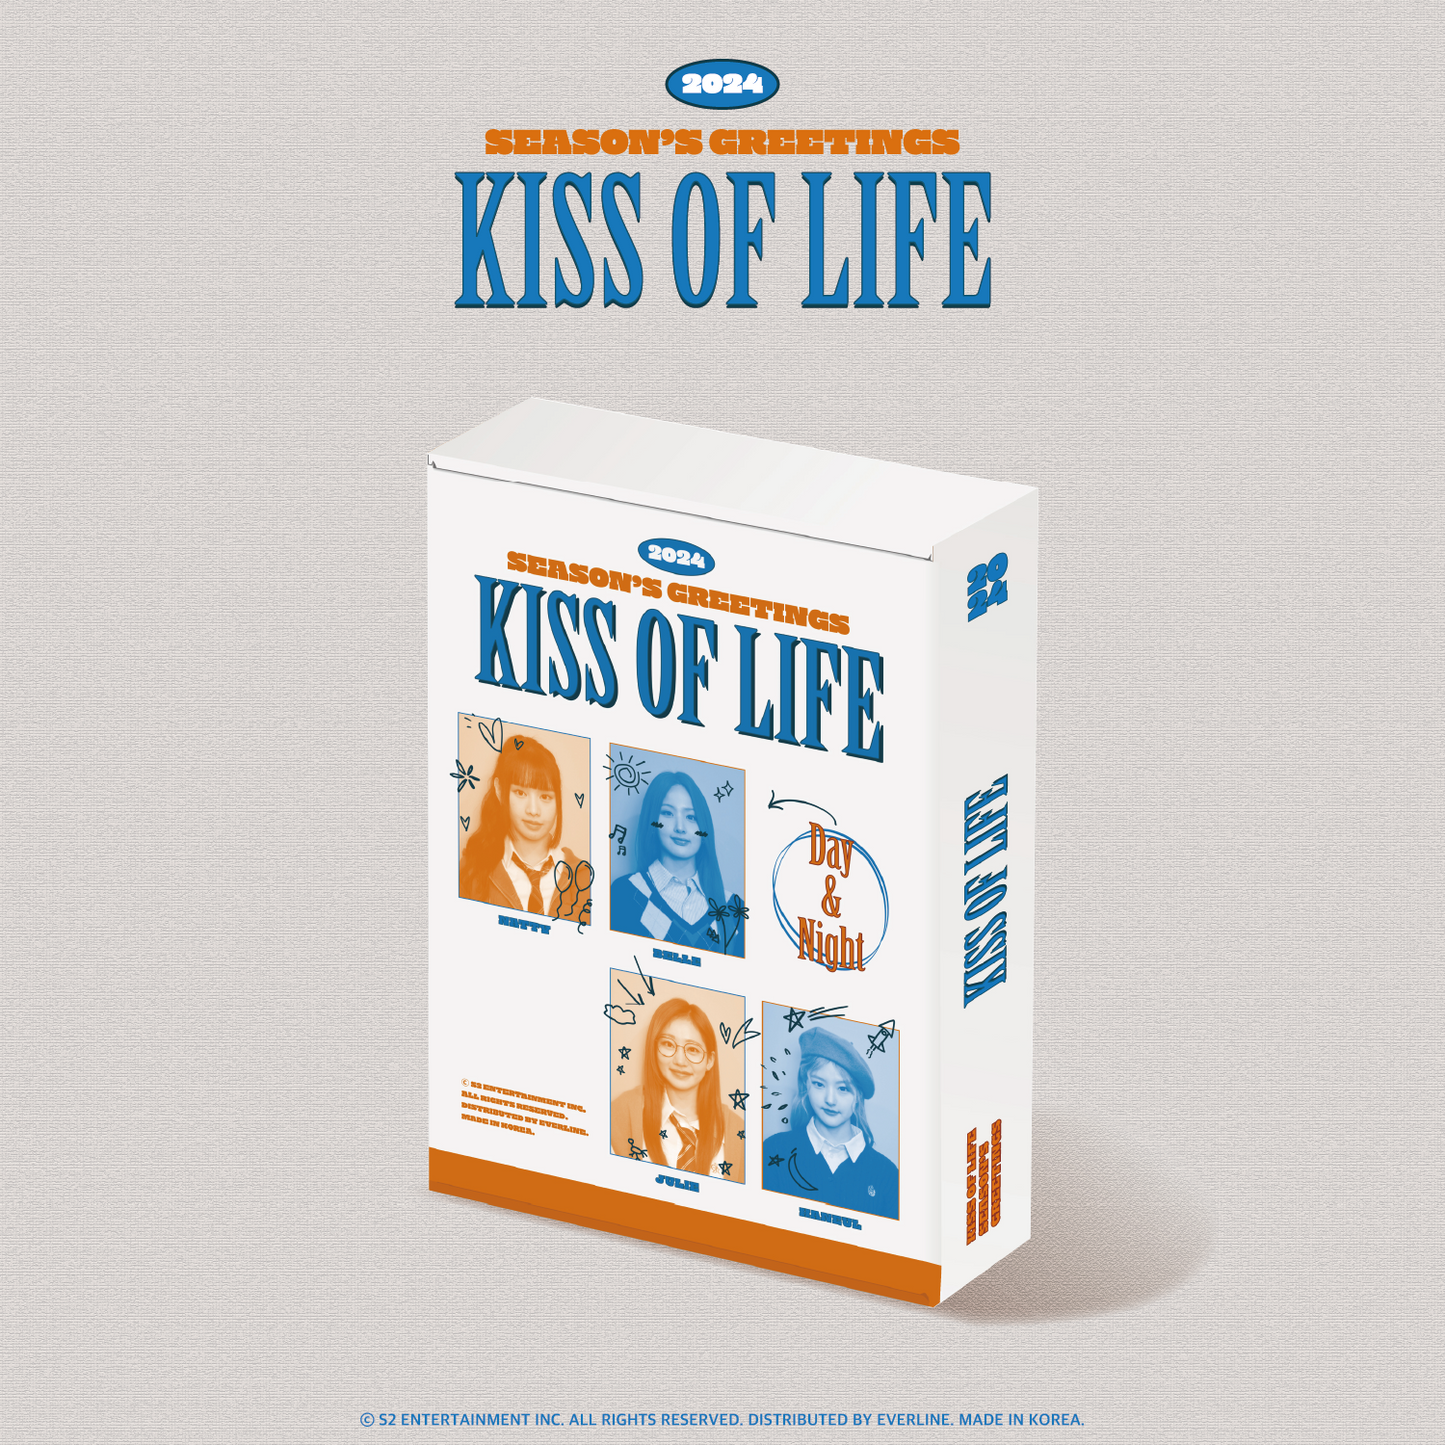 KISS OF LIFE 2024 SEASON'S GREETINGS COVER